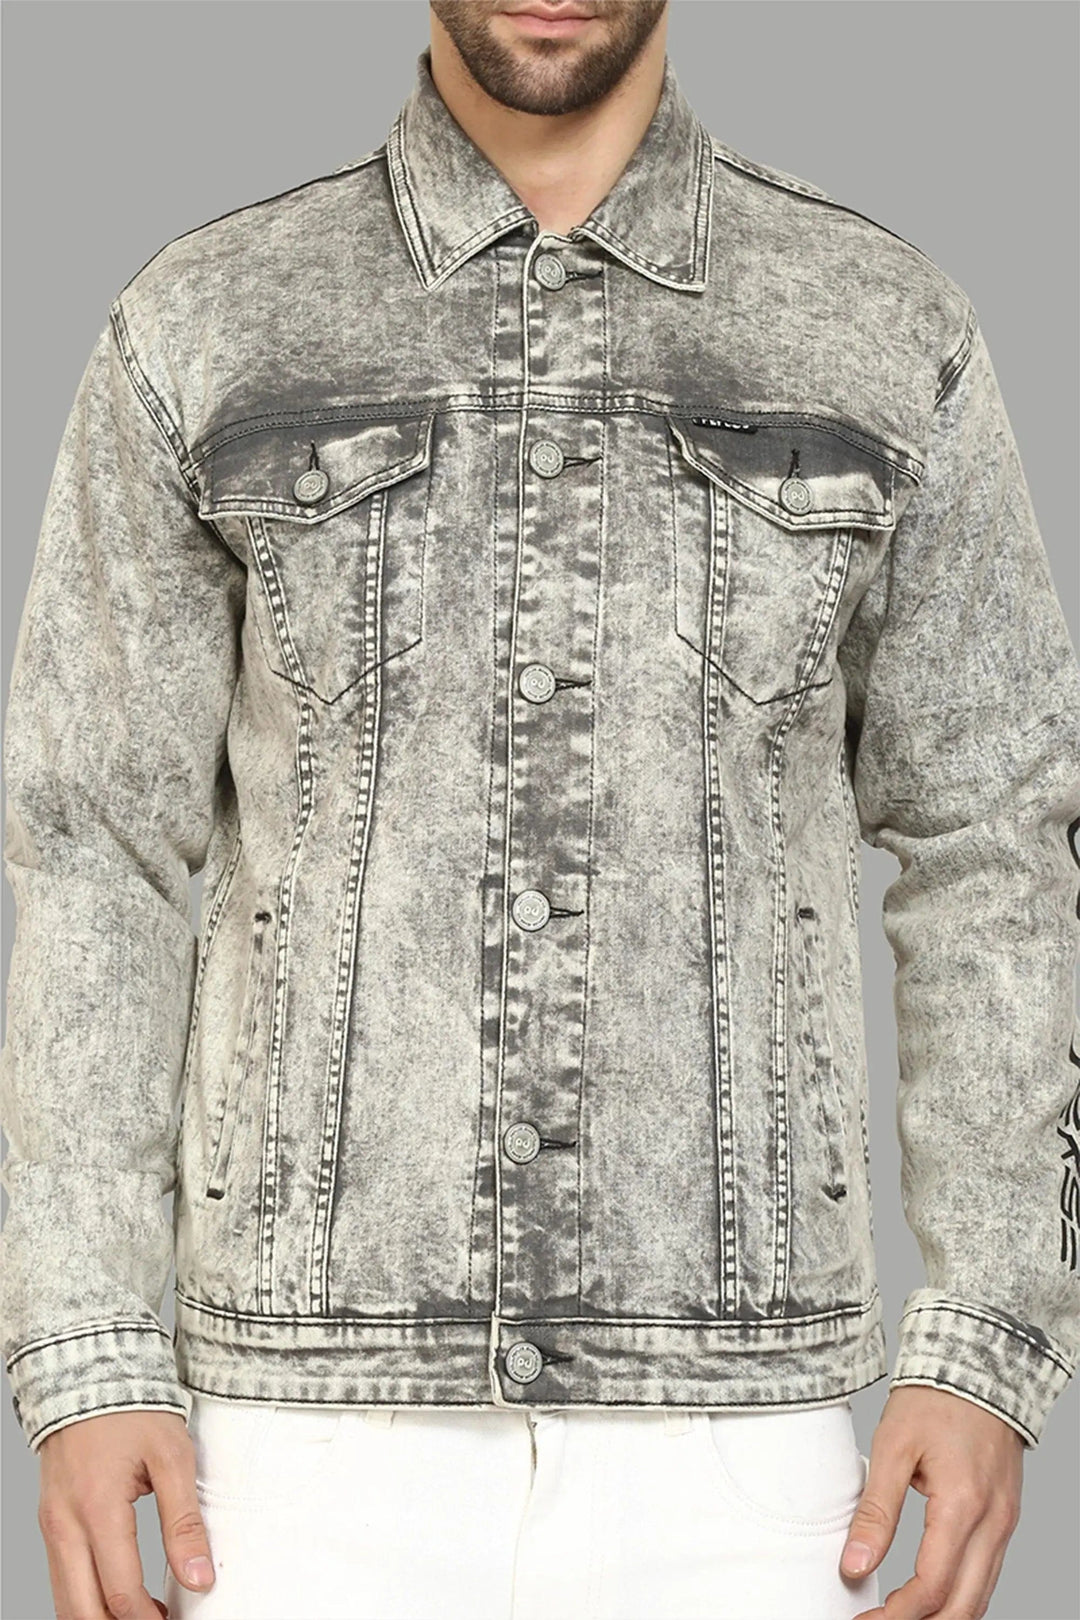 Regular Fit Cloud Grey Premium Denim Jacket for Men - Peplos Jeans 